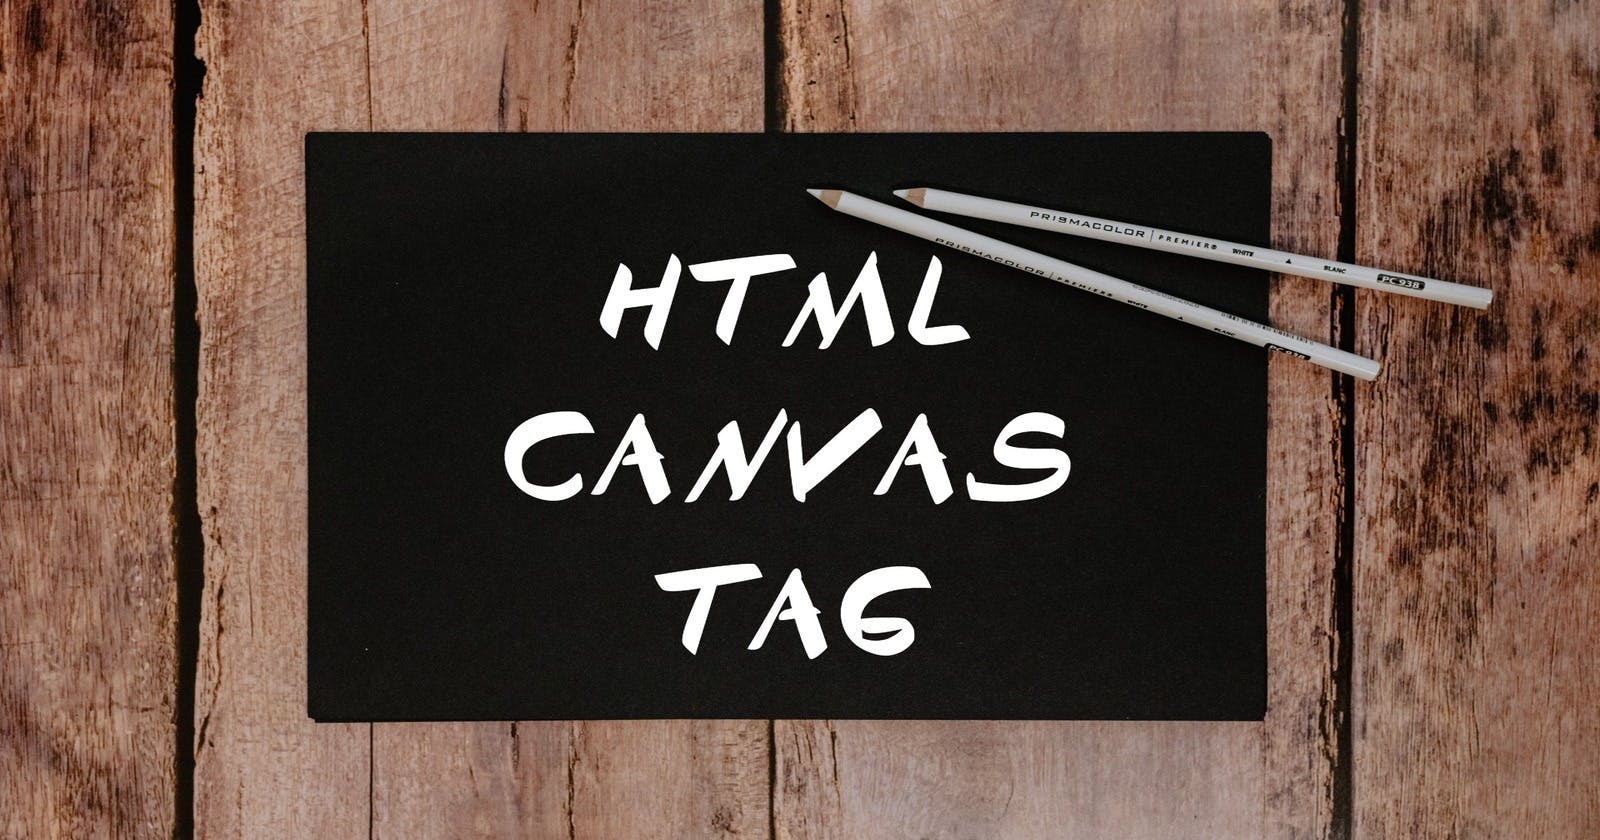 HTML Canvas Tag